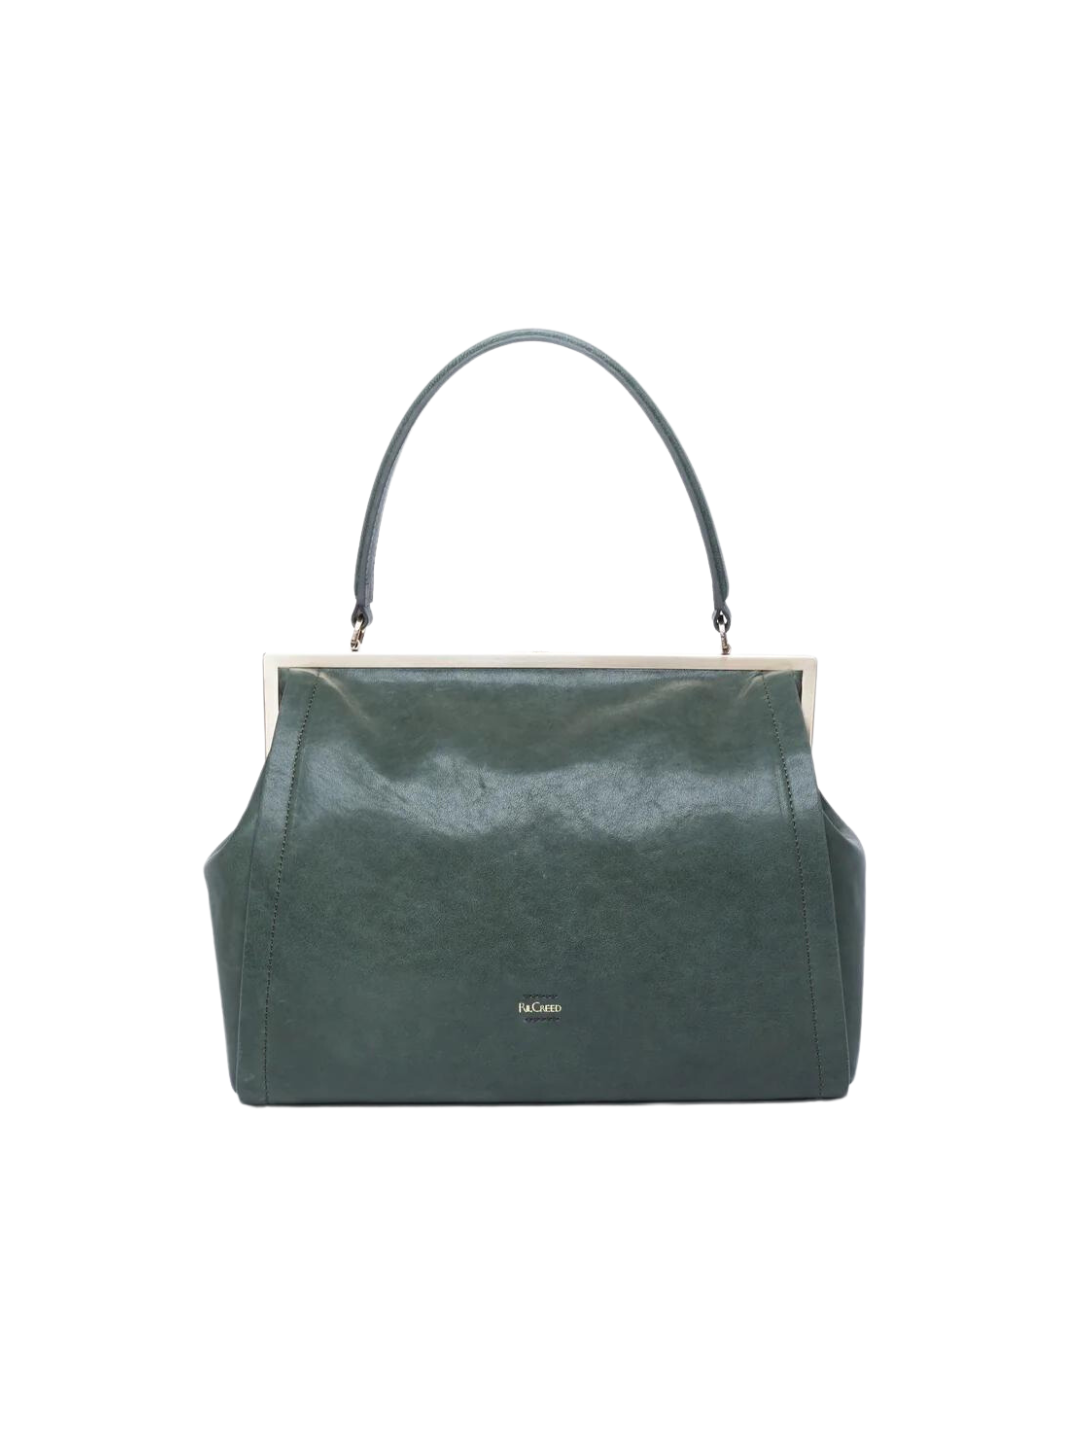 Celia bag genuine leather upcycled women's fashion shop sustainable